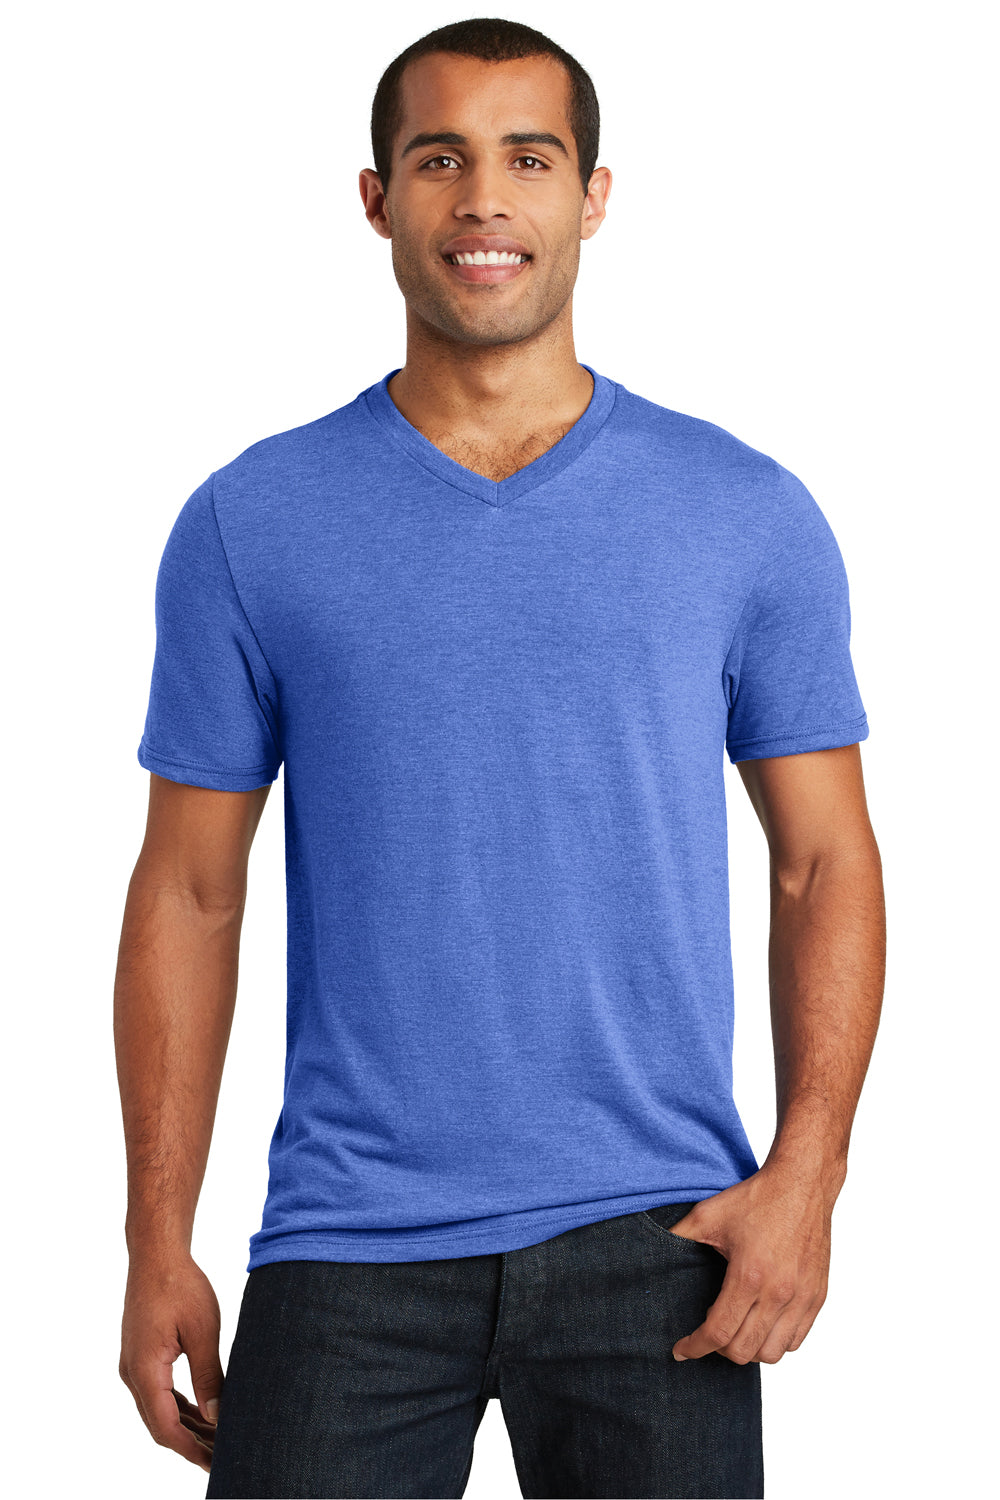 District DT1350 Mens Perfect Tri Short Sleeve V-Neck T-Shirt Royal Blue Frost Front